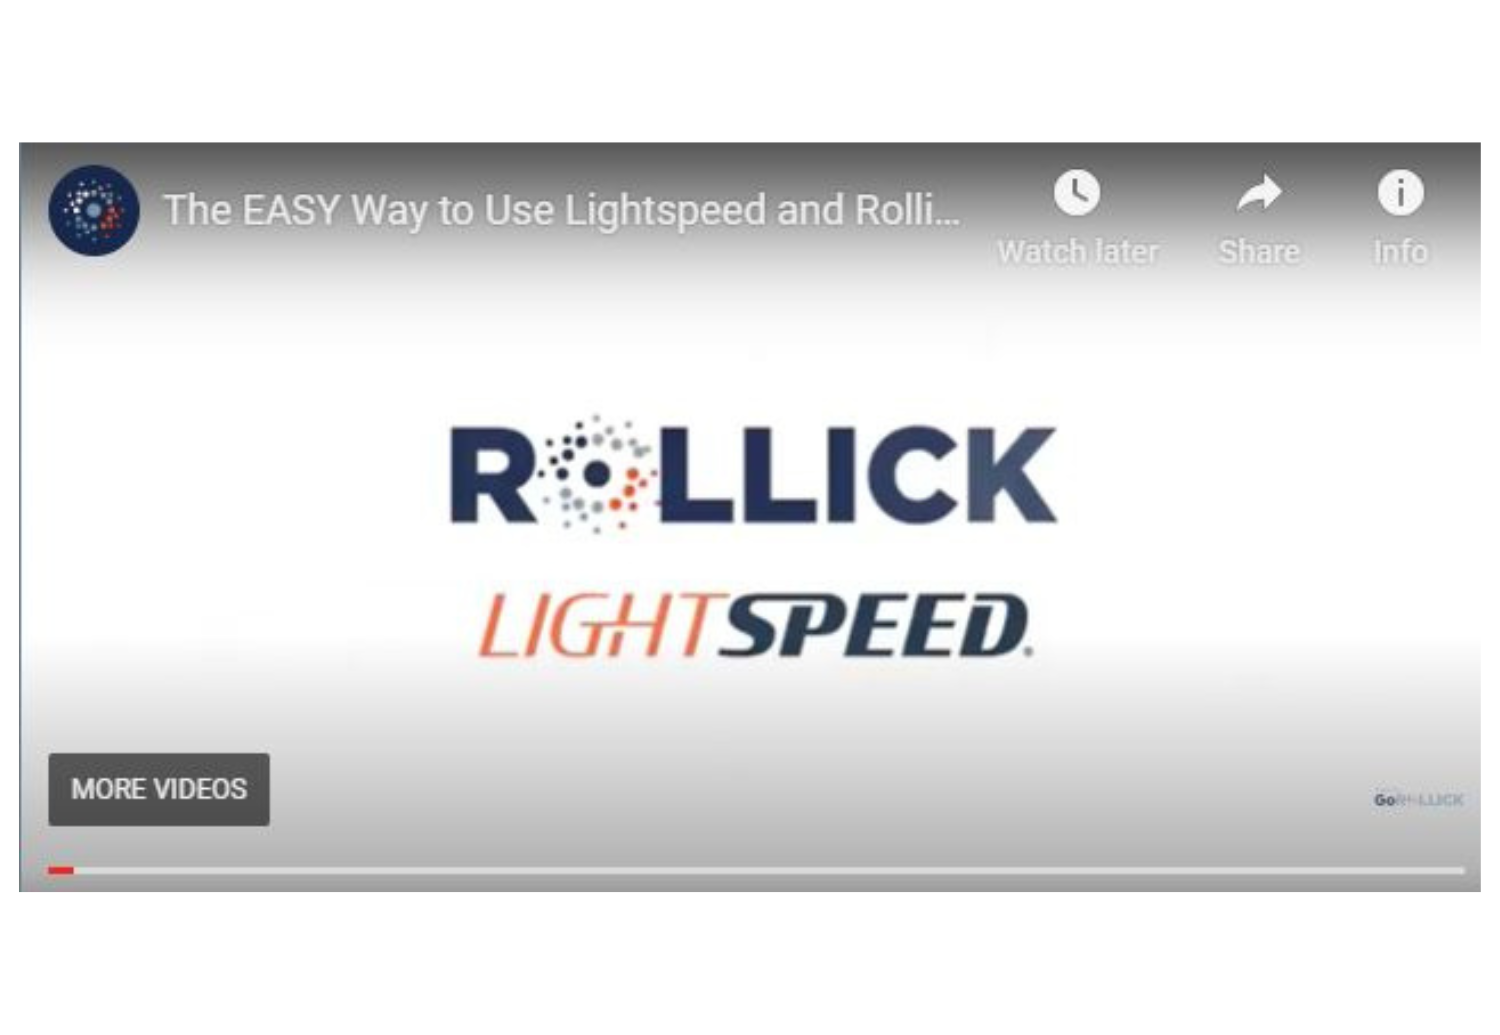 Rollick Video Image